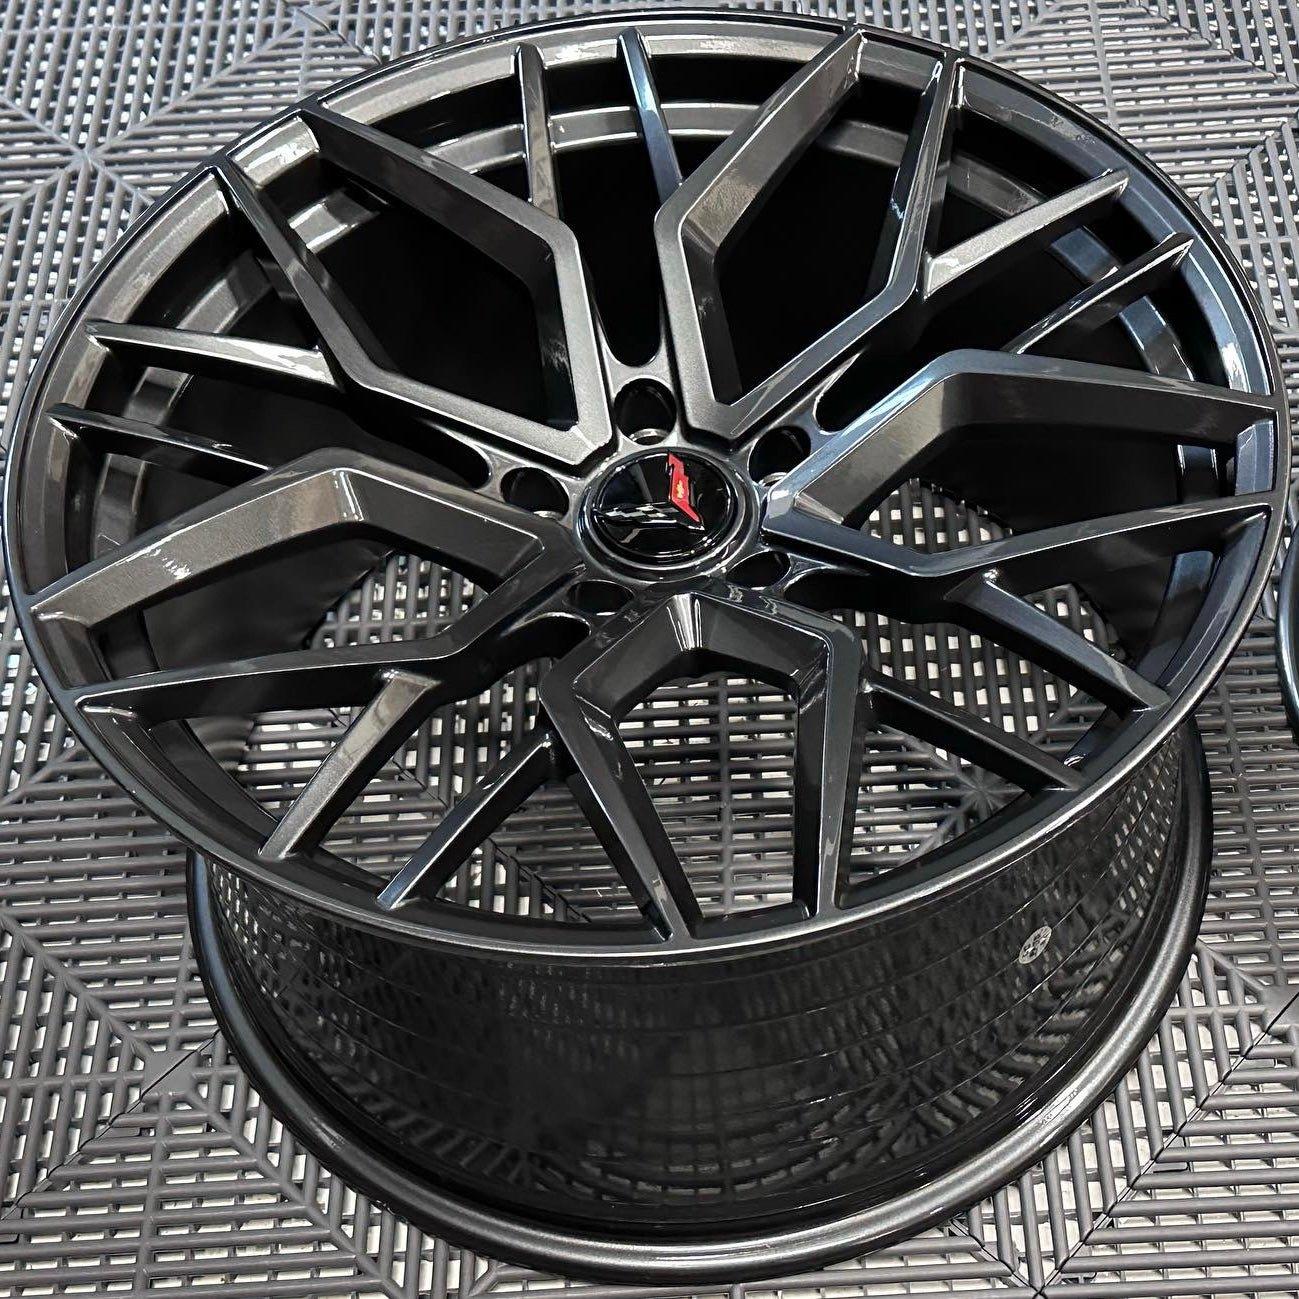 ALT Velocity Rotary Form 19x8.5 / 20x11 wheels for C8 Corvette Z51 - Gem Motorsports